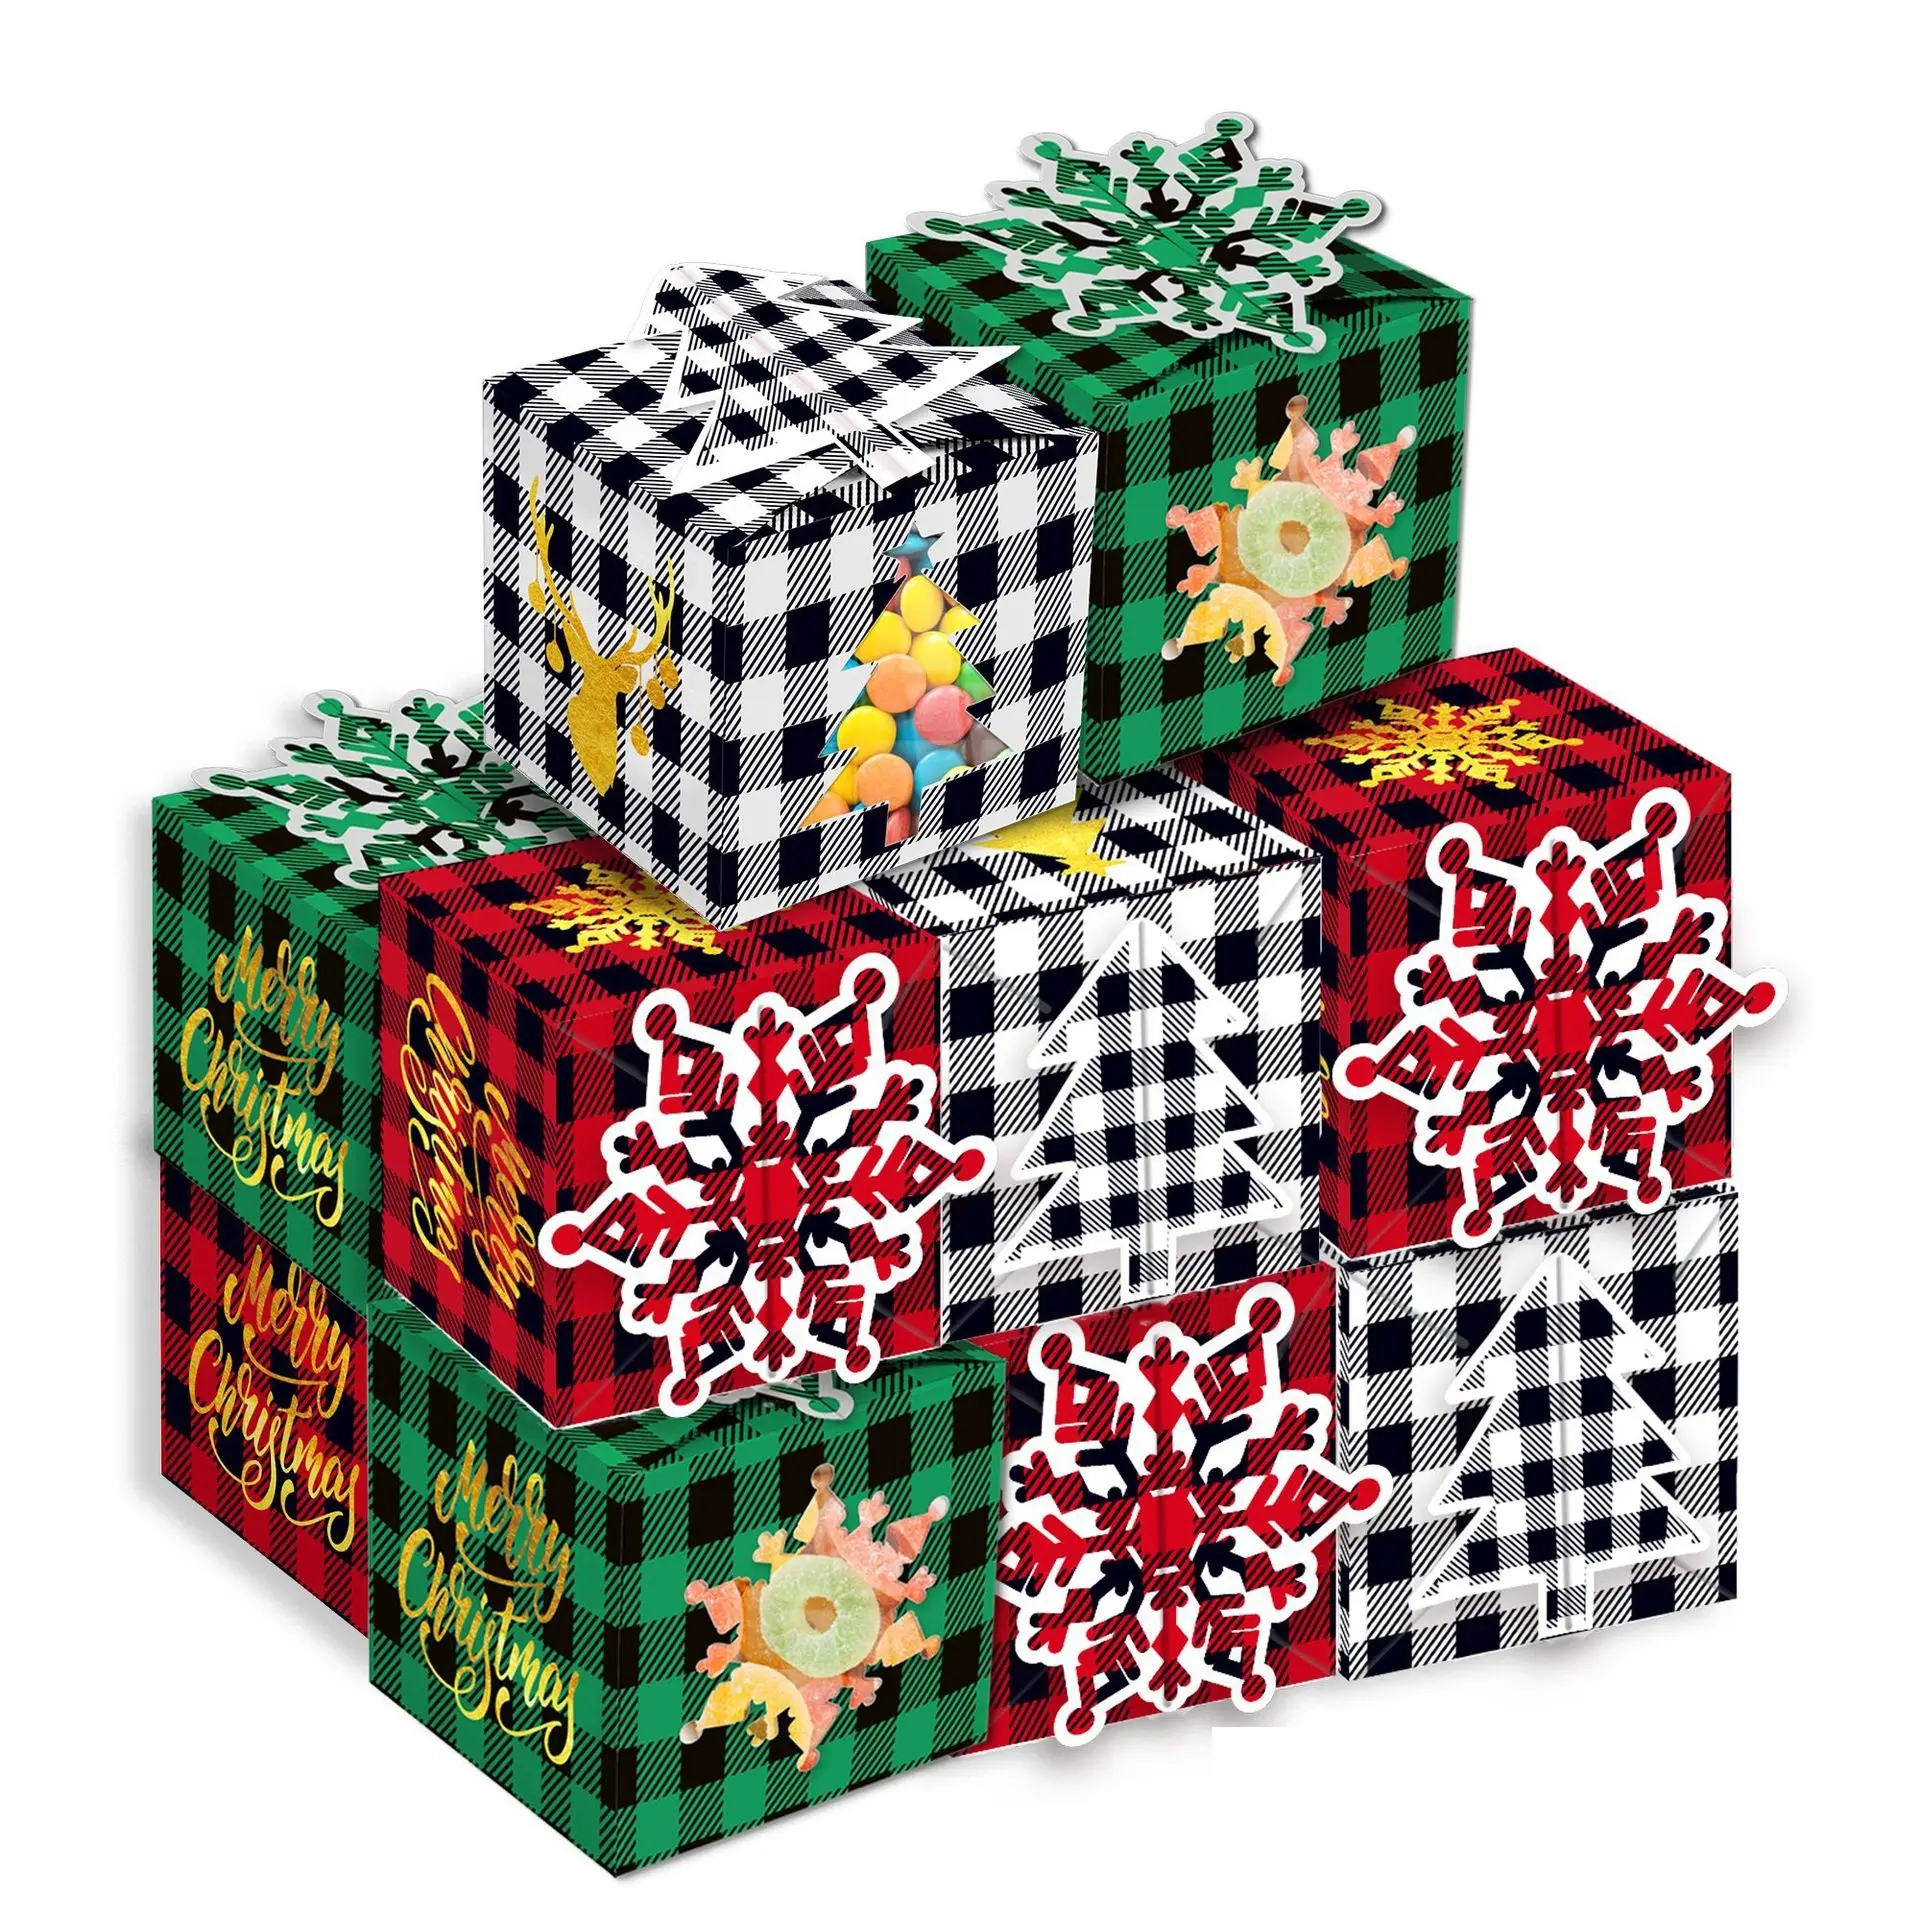 12pcs קופסאות עוגיות חג המולד עם חלון חג המולד קופסאות מתנה לחג המולד צבעוני חג המולד פינוק קופסאות לממתלי שוקולד מאפה עוגיות